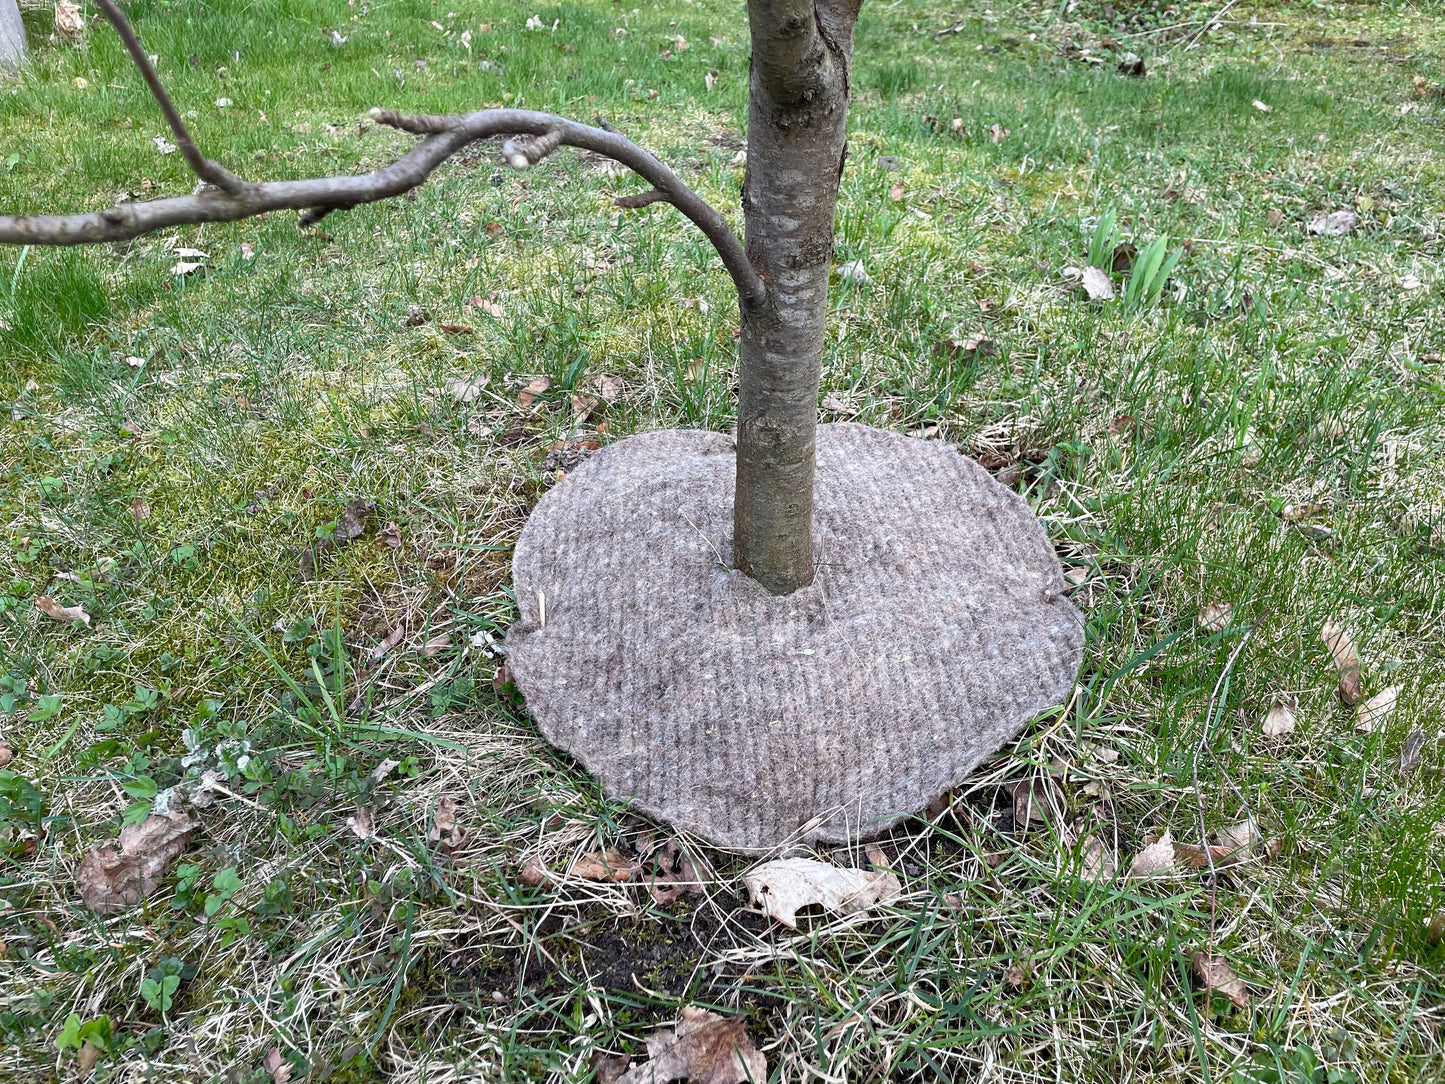 Sheep's wool mulch discs